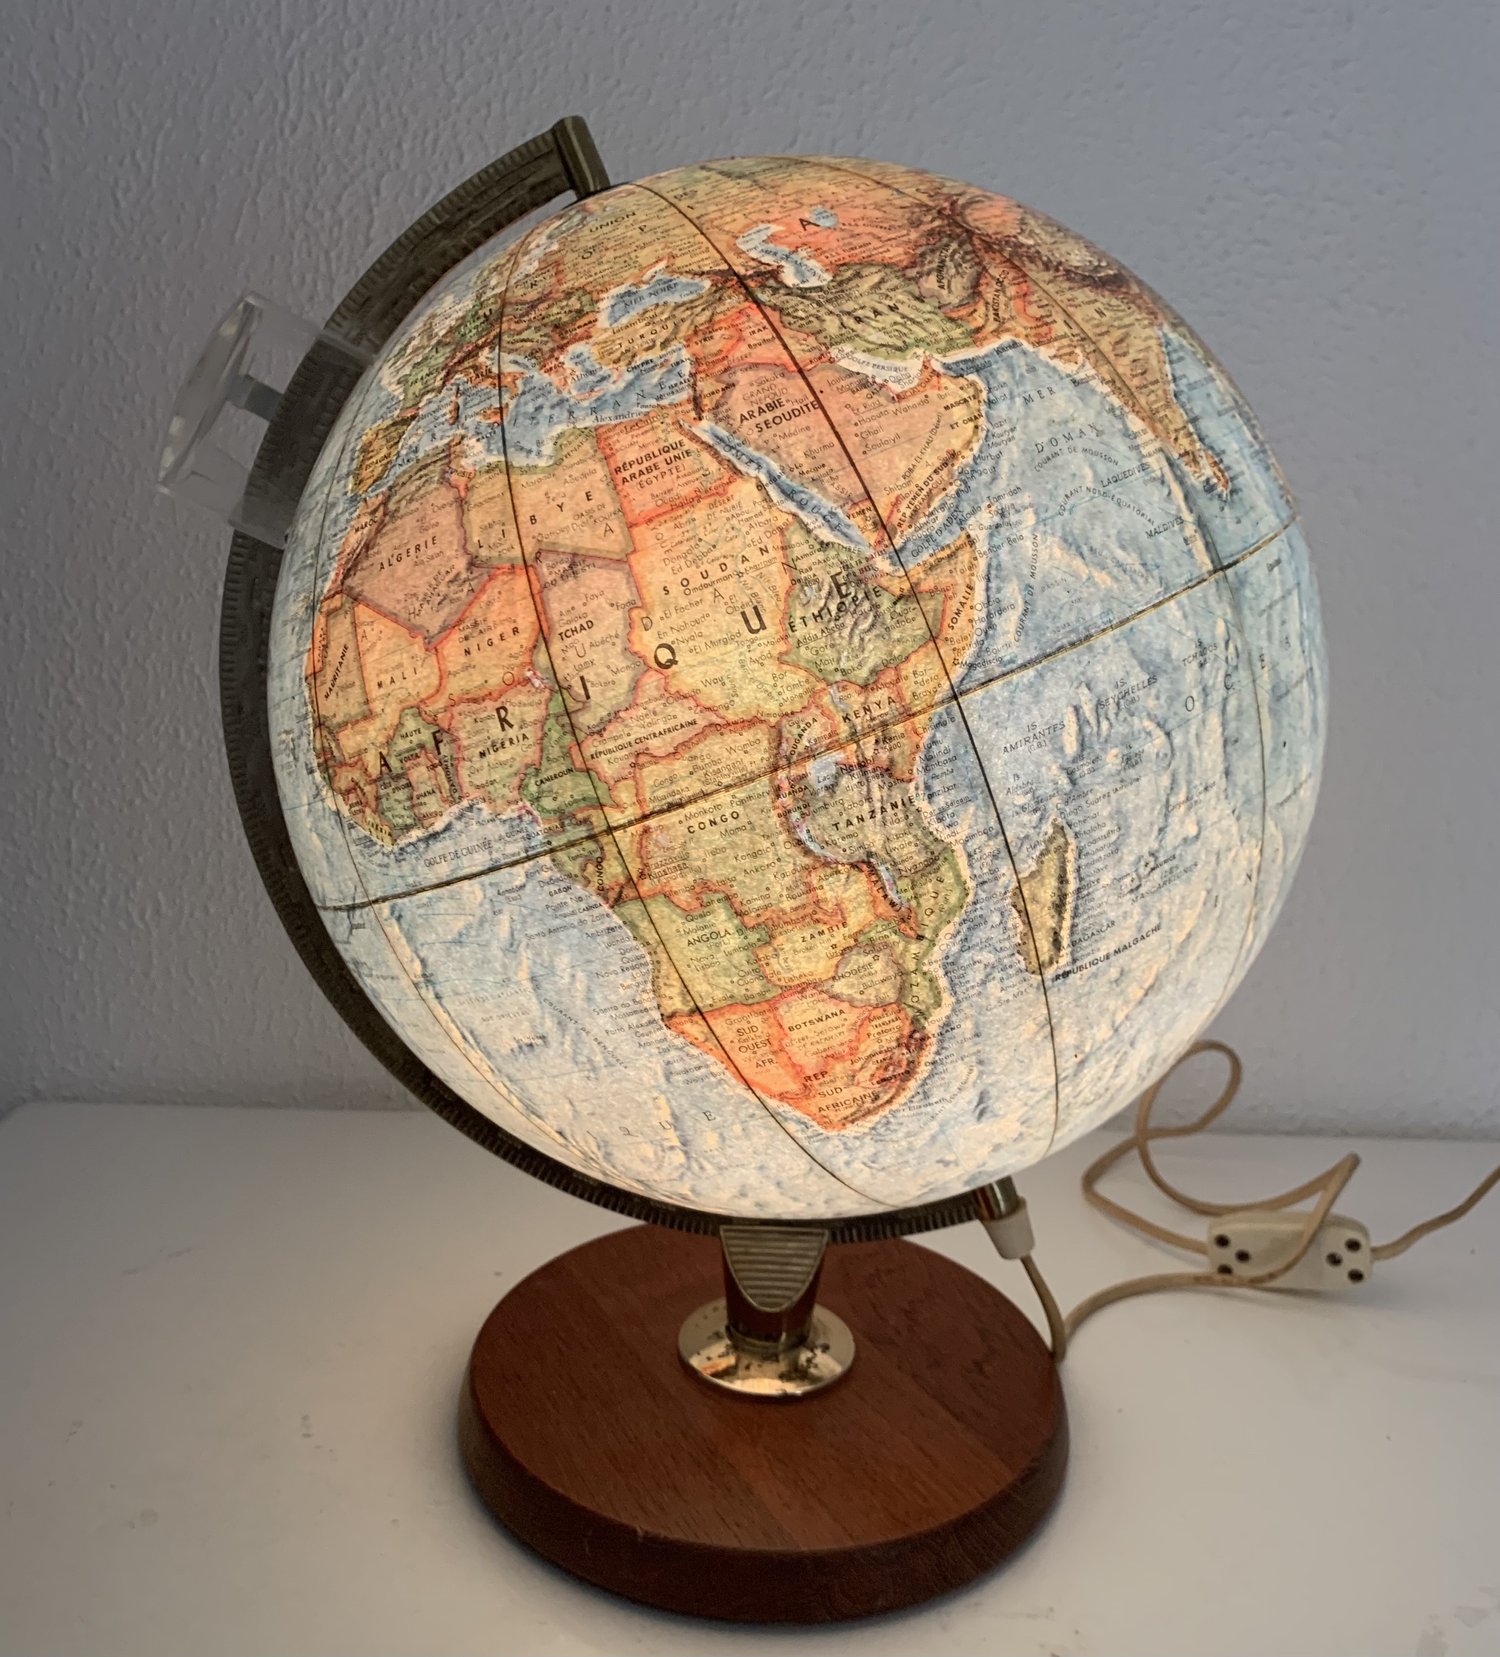 Mappemonde globe terrestre SCAN.GLOBE -Danemark-indiquant